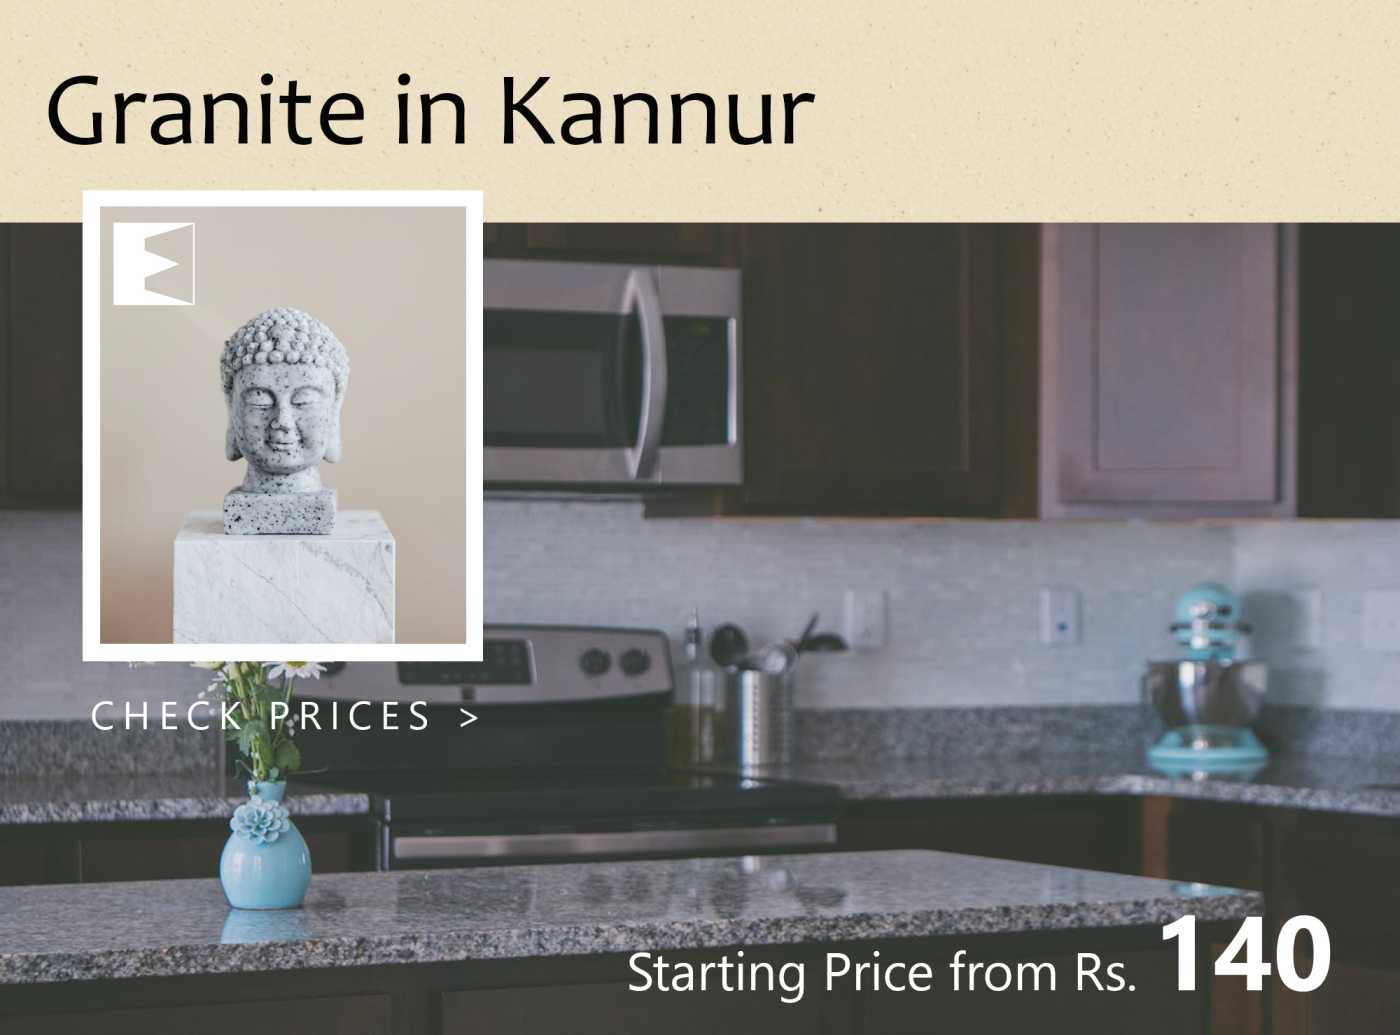 Granite Price in Kannur | Starting from 140 INR